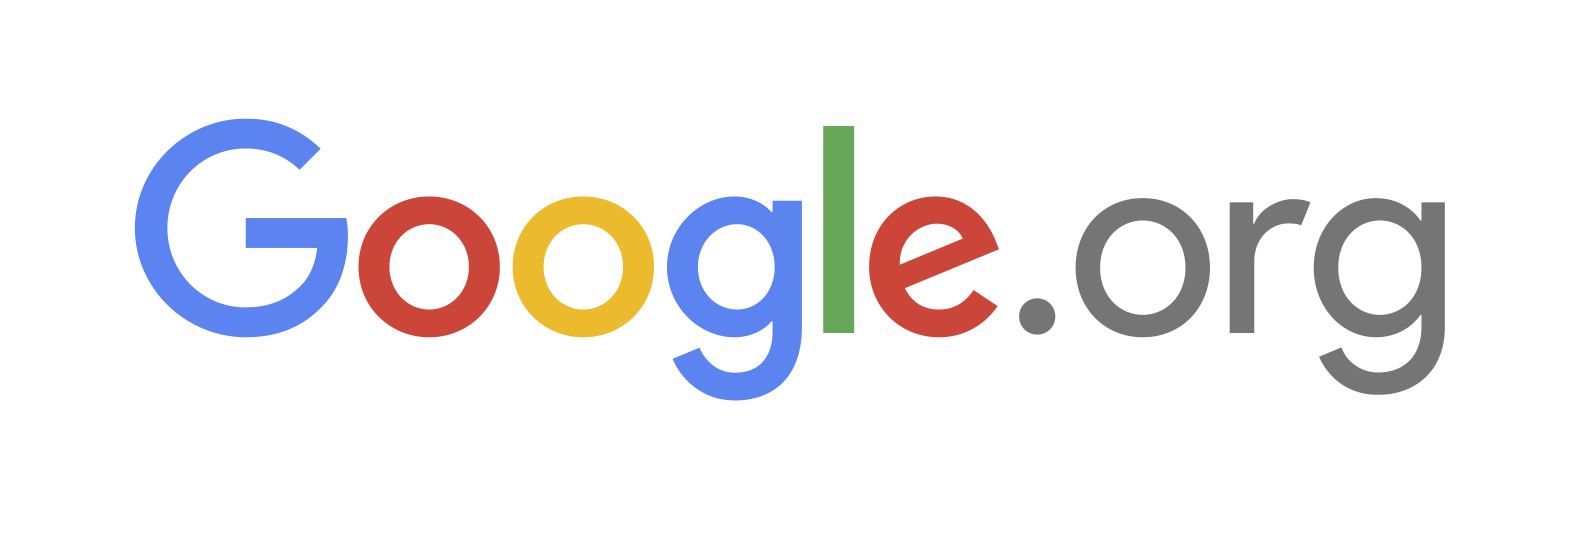 Google_org_logo_color-61c0541bc394aa58bc2320083df002c7.jpg